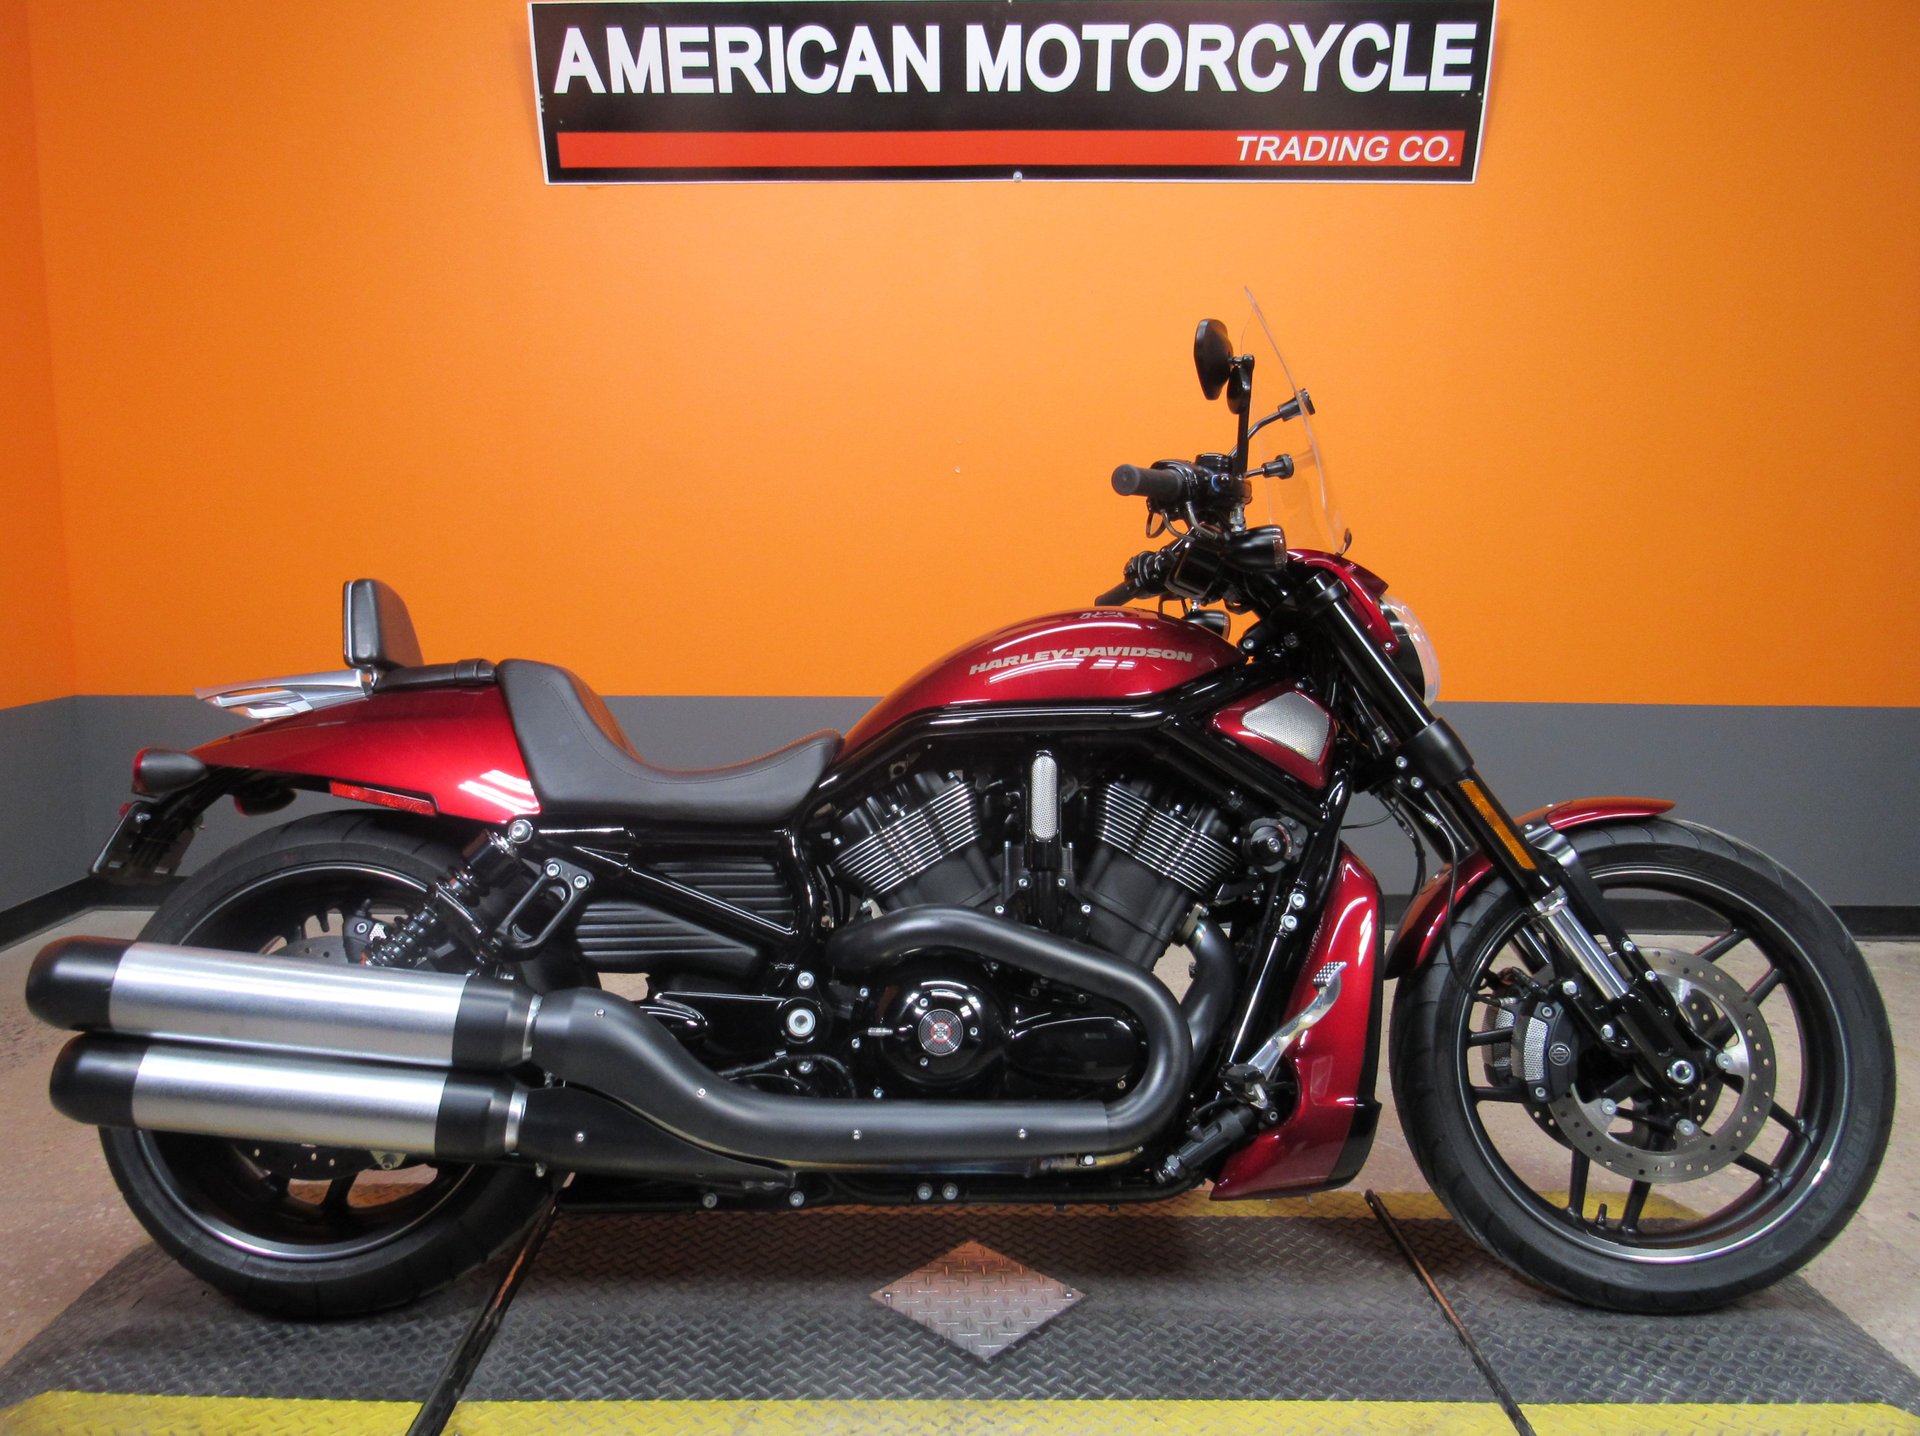 2016 Harley Davidson V Rod American Motorcycle Trading Company Used Harley Davidson Motorcycles